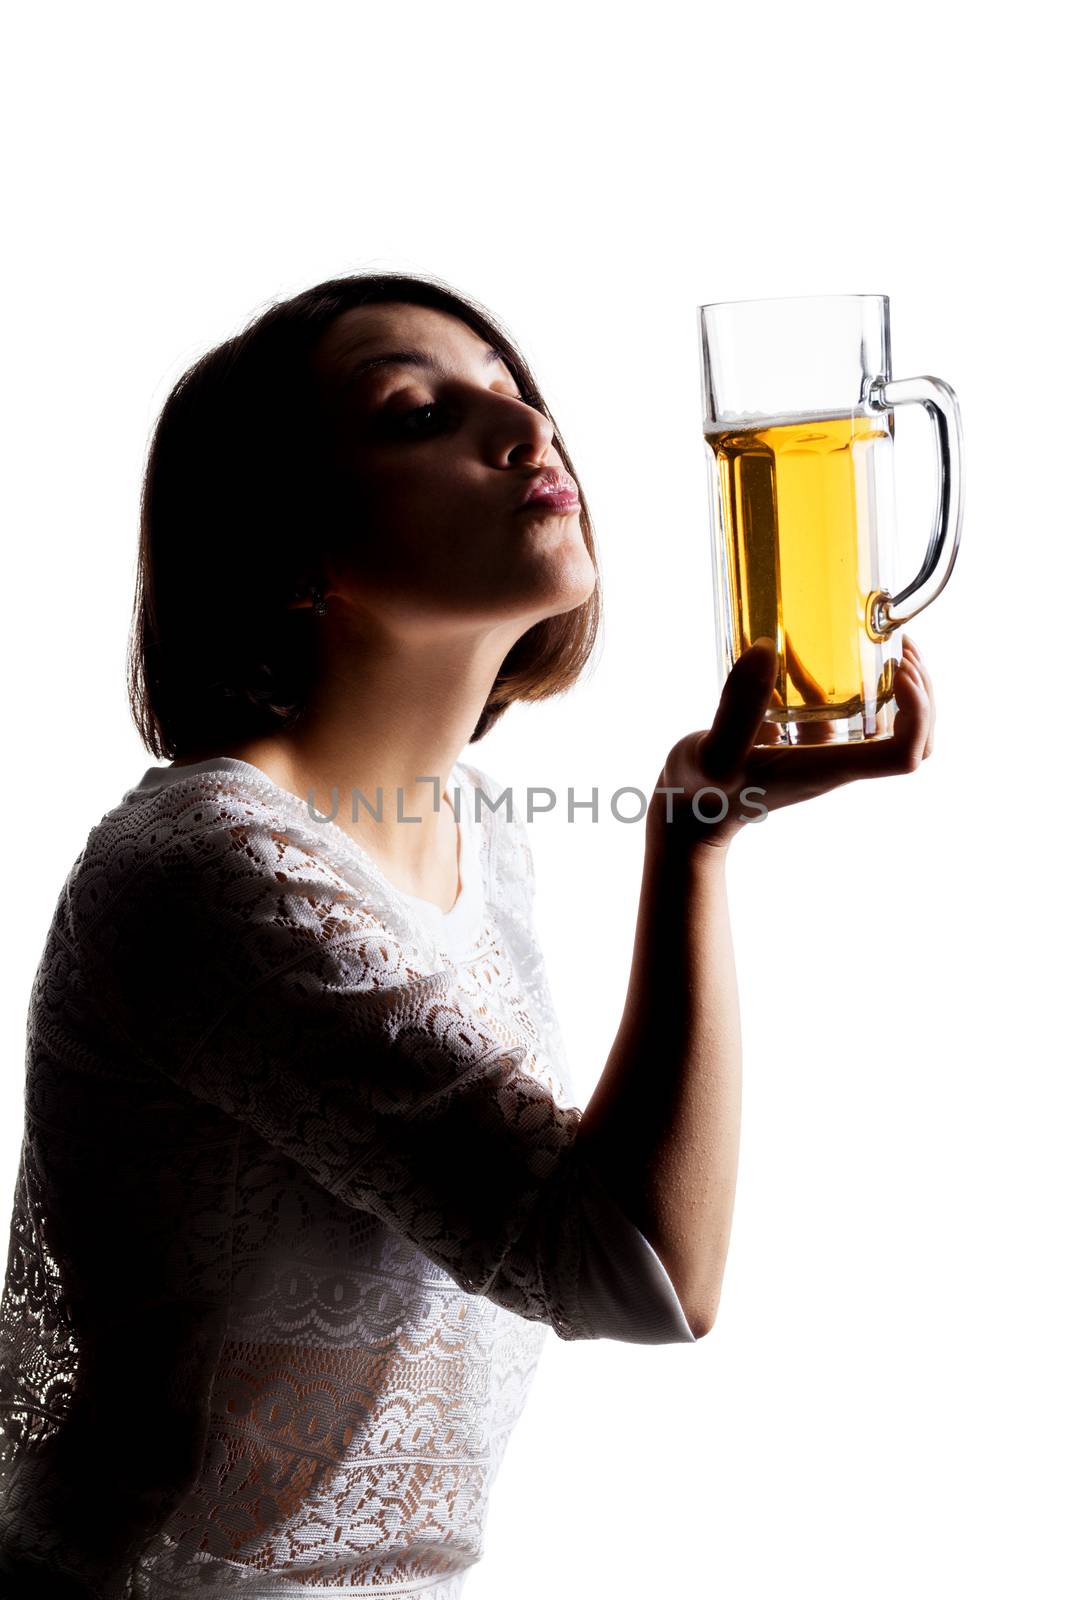 girl kissing a beer mug against white background, making duckface, half silhouette